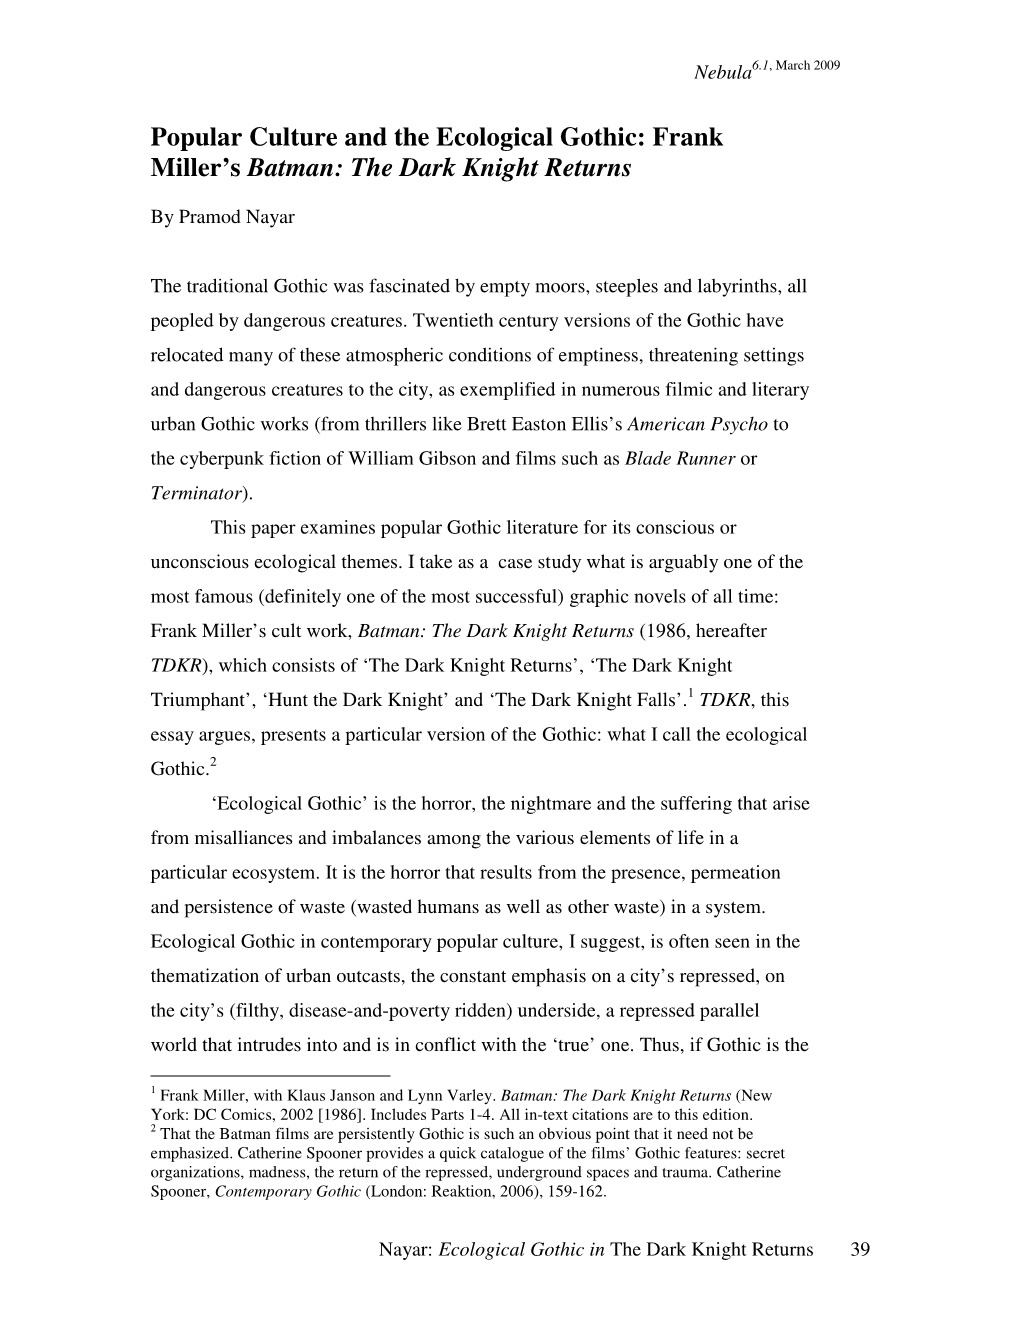 Pramod Nayar. “Popular Culture and the Ecological Gothic: Frank Miller's Batman: the Dark Knight Returns.”